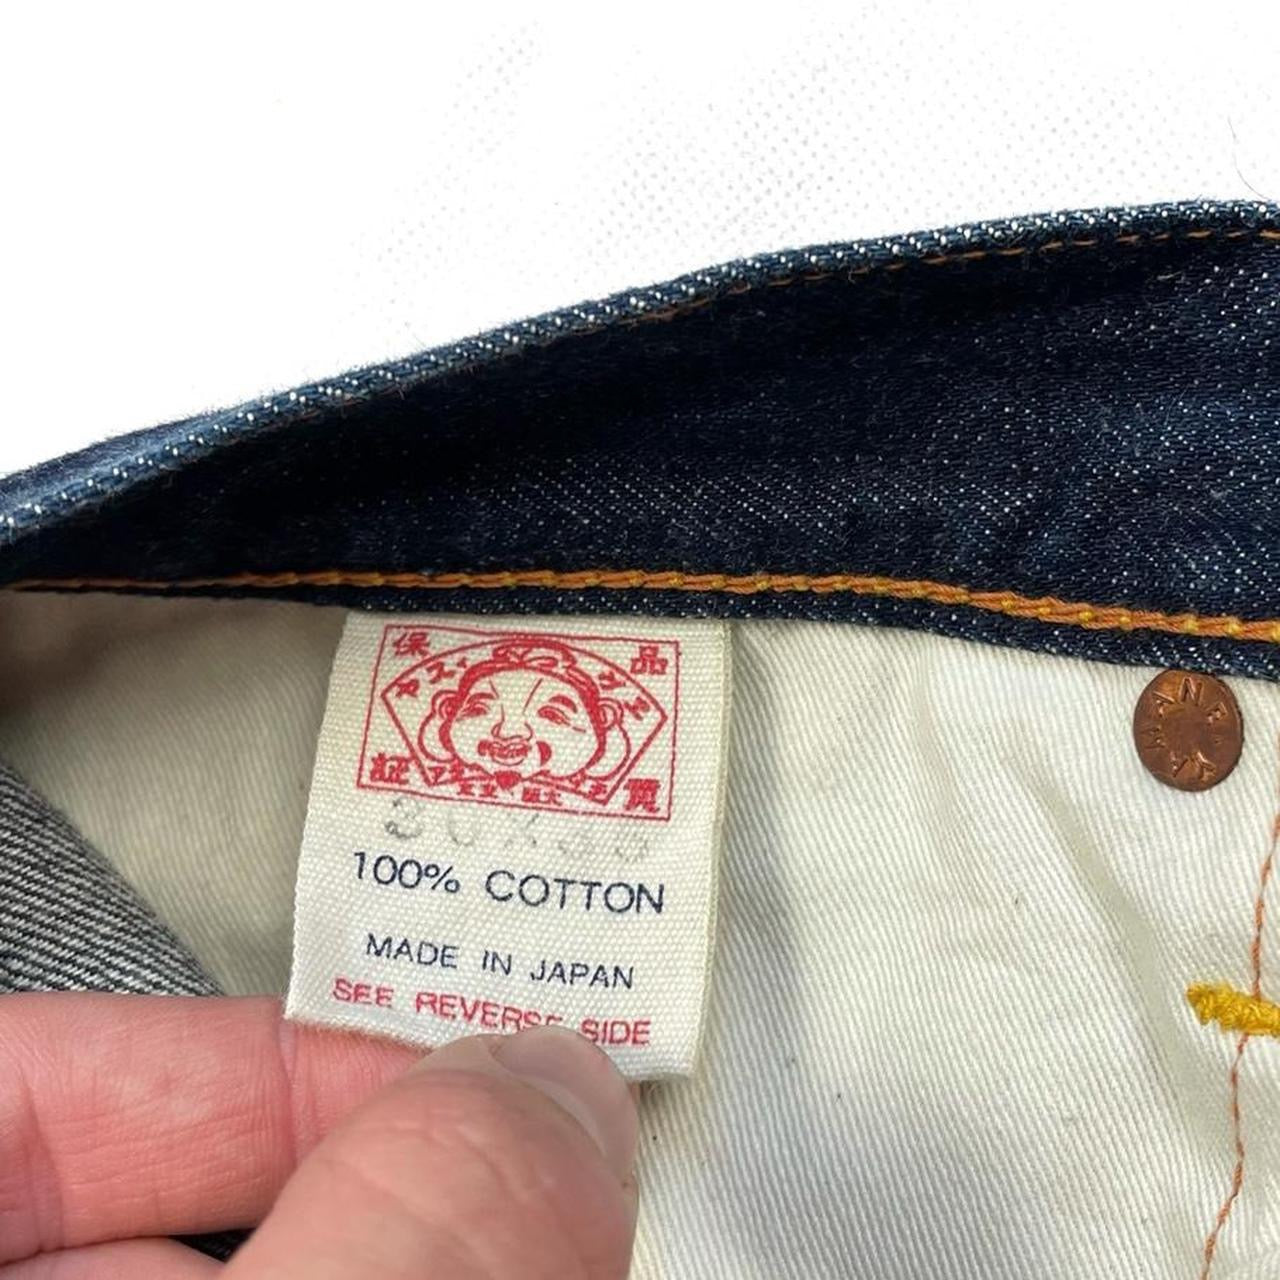 Evisu Selvedge Jeans With Double White Daicocks ( W30 )